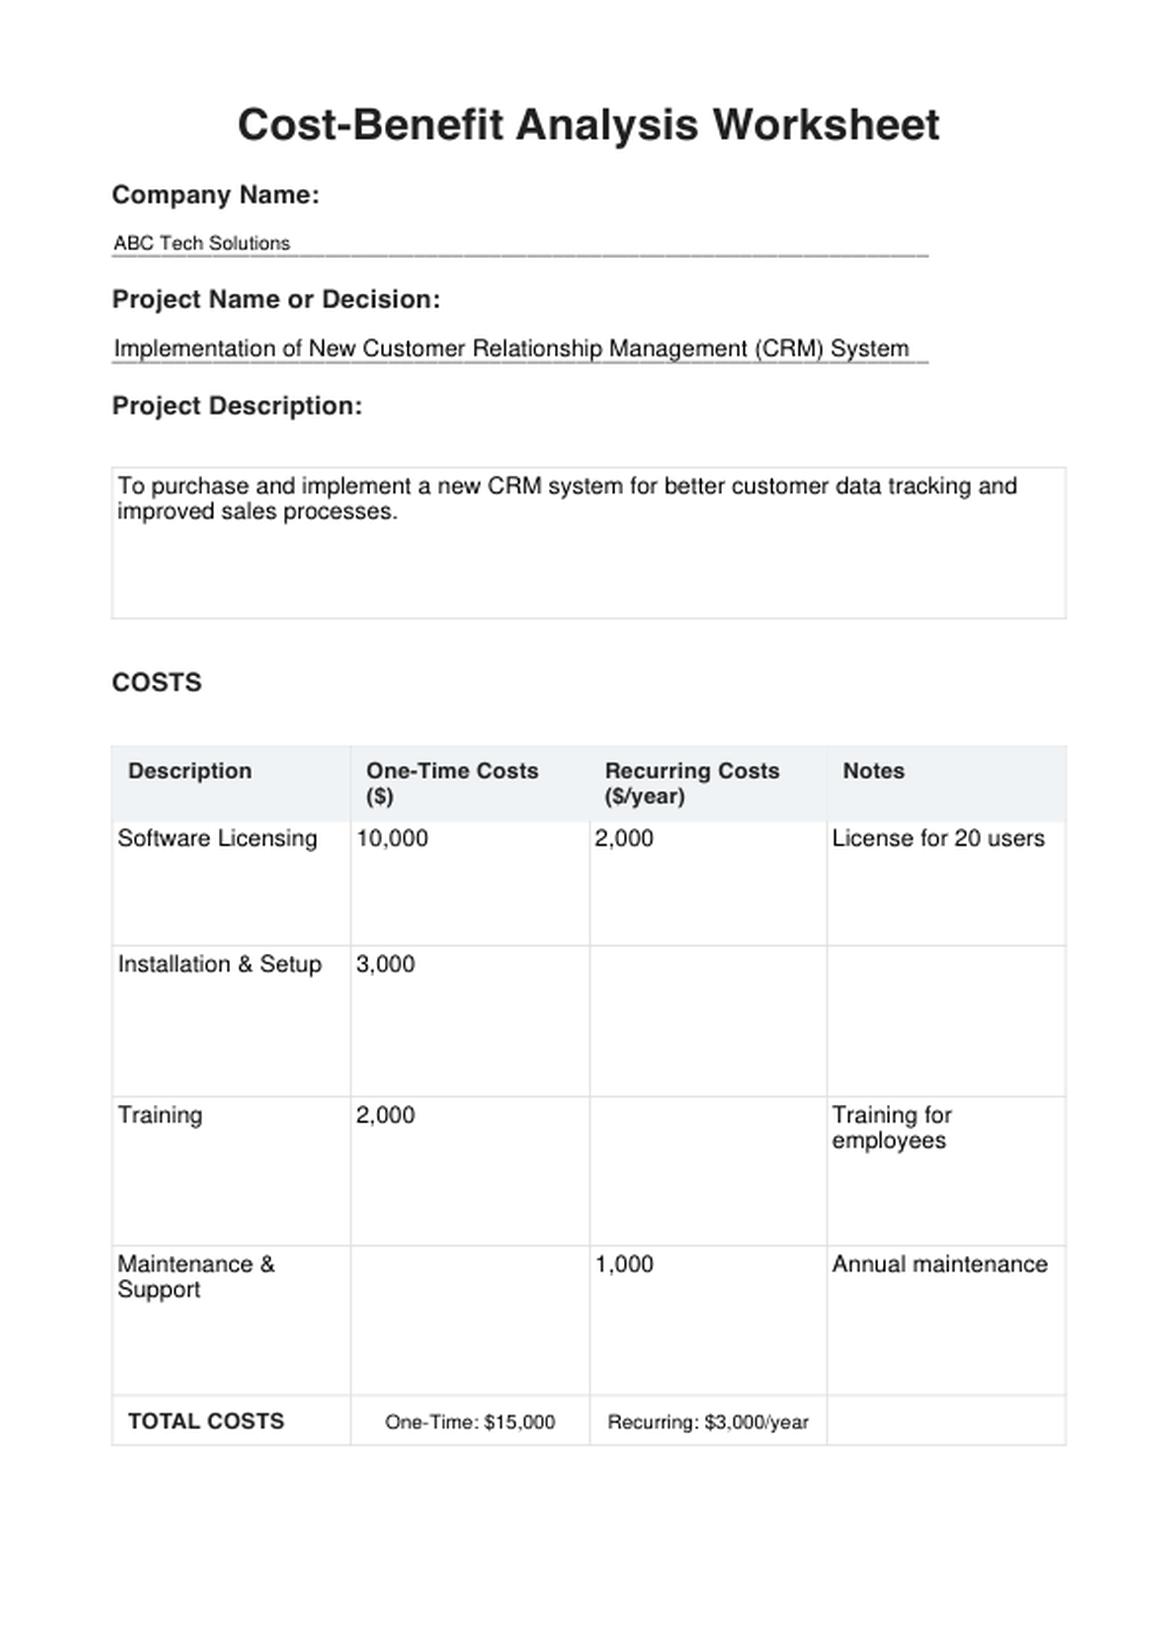 Cost Benefit Analysis Worksheet PDF Example